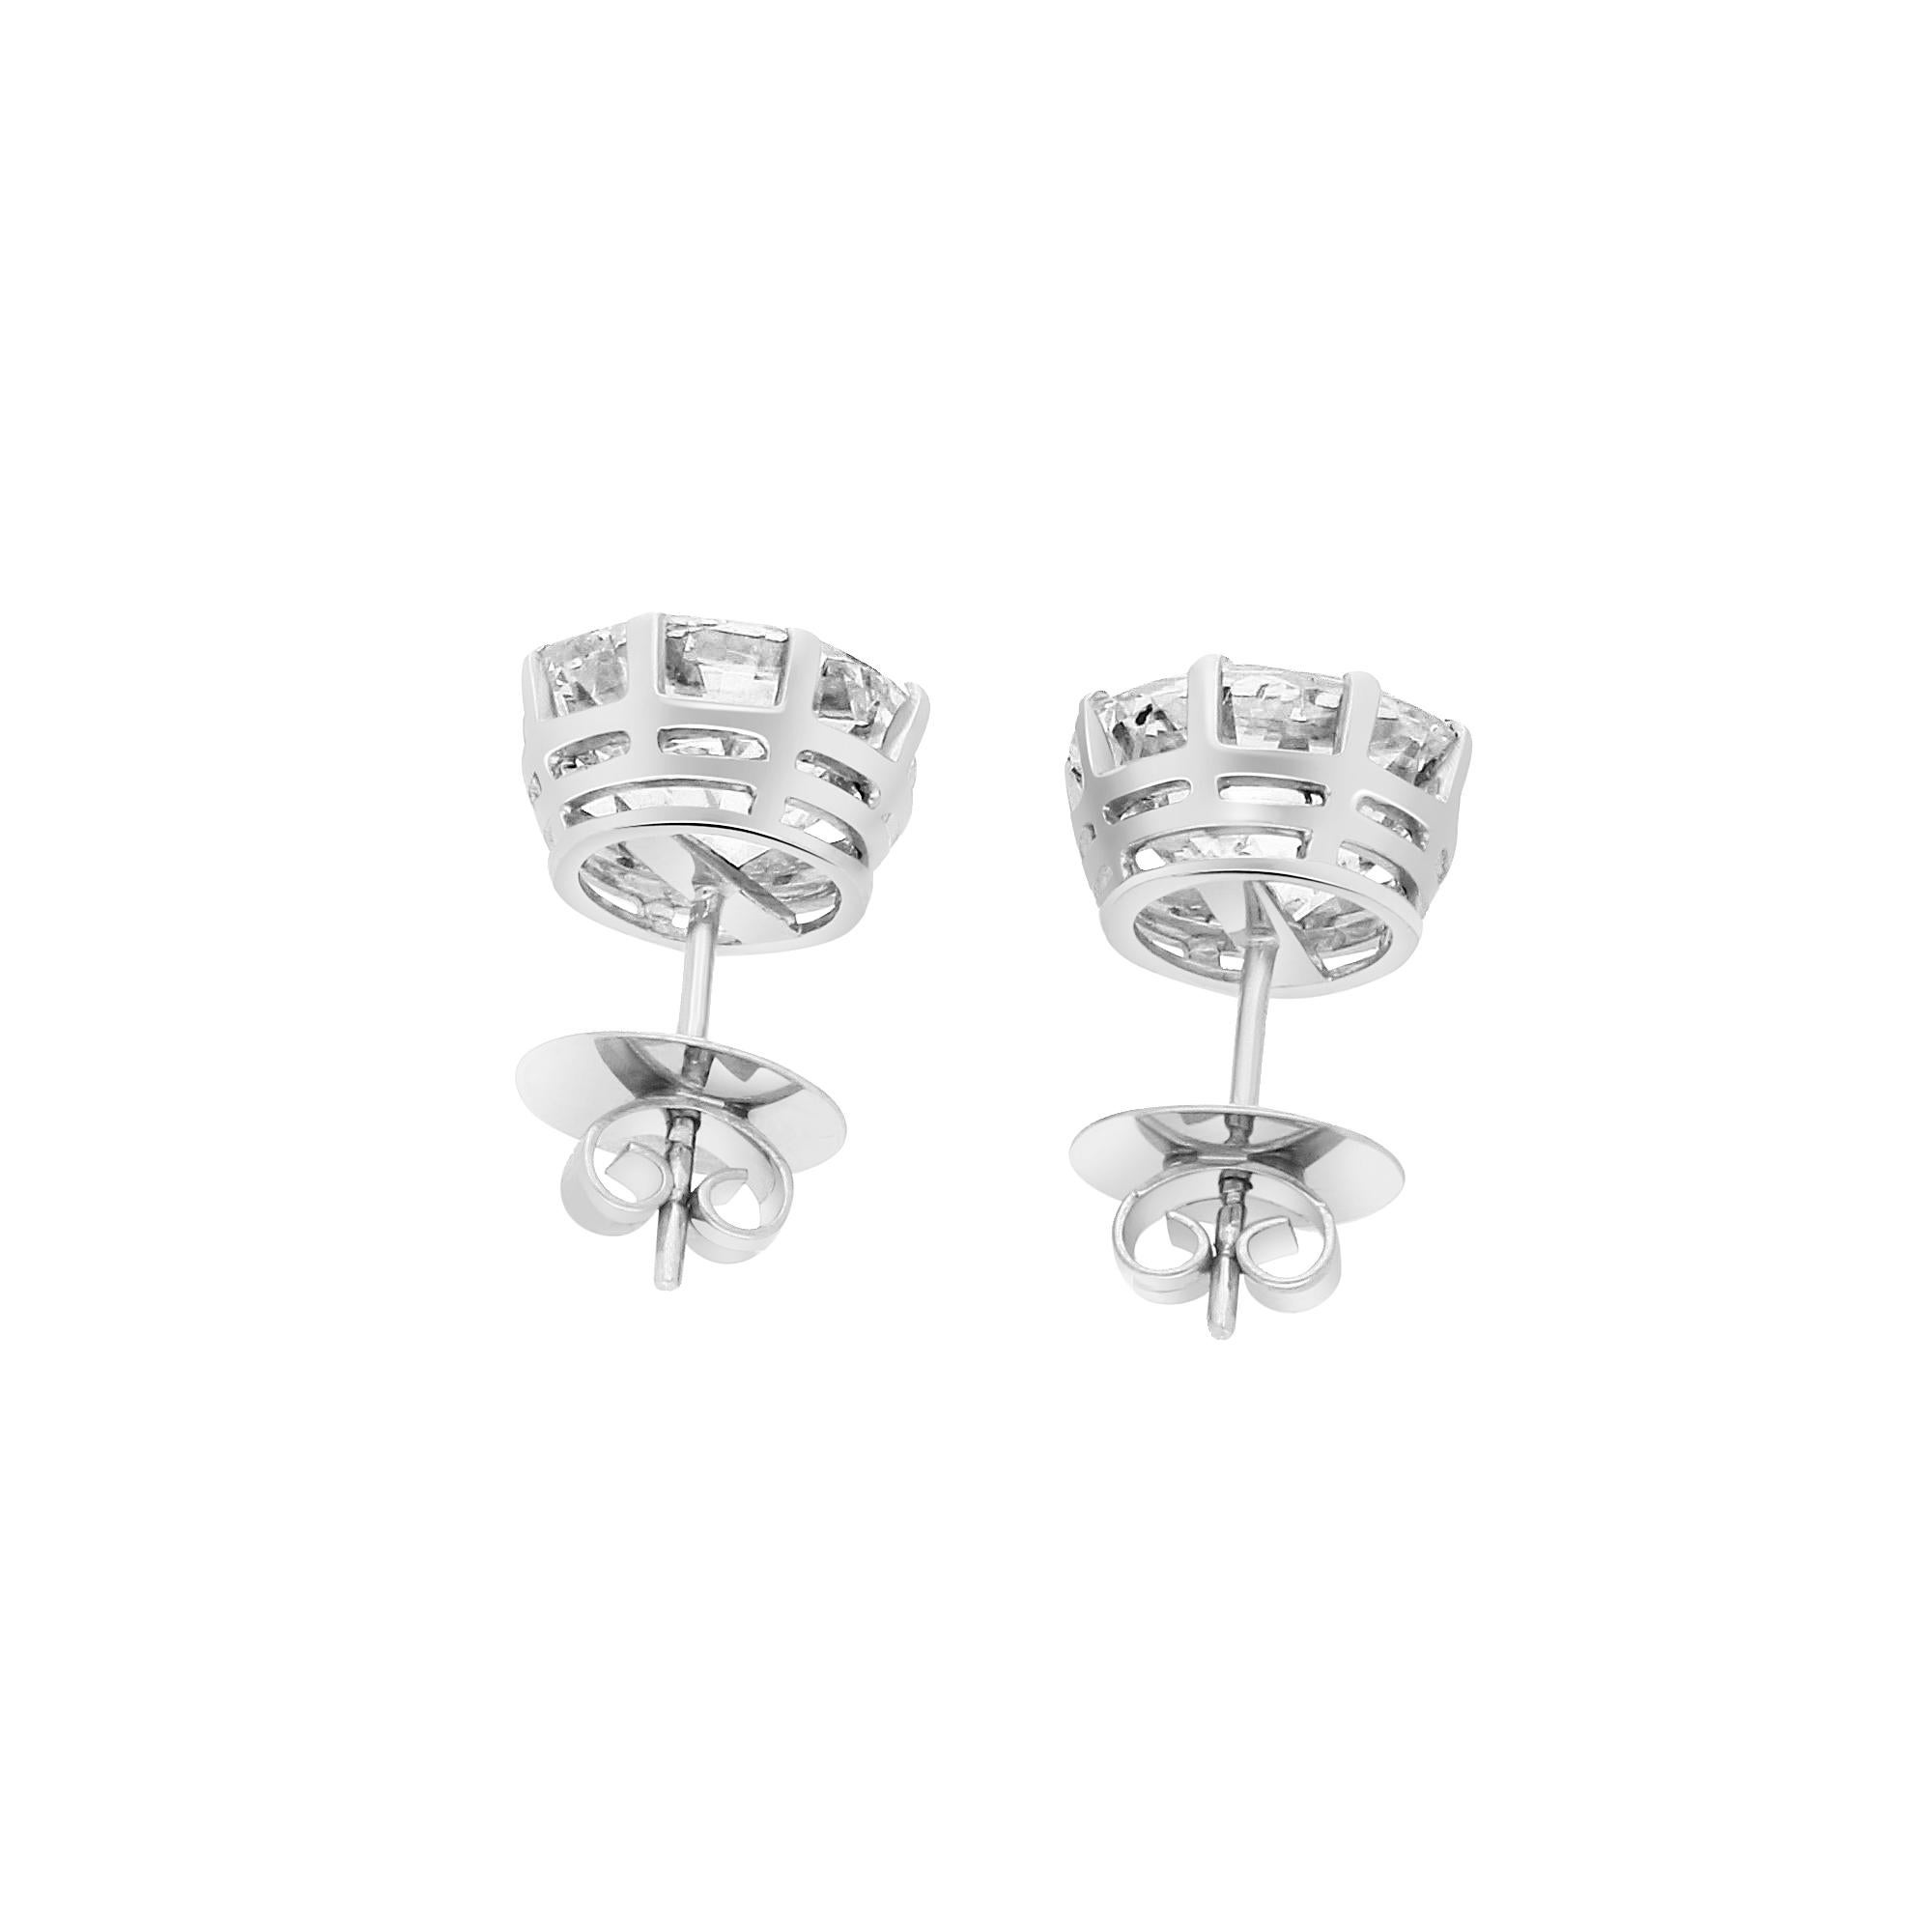 Victorian GIA Certified 12.64 Carat Old European Diamond Stud Earrings Set in Platinum